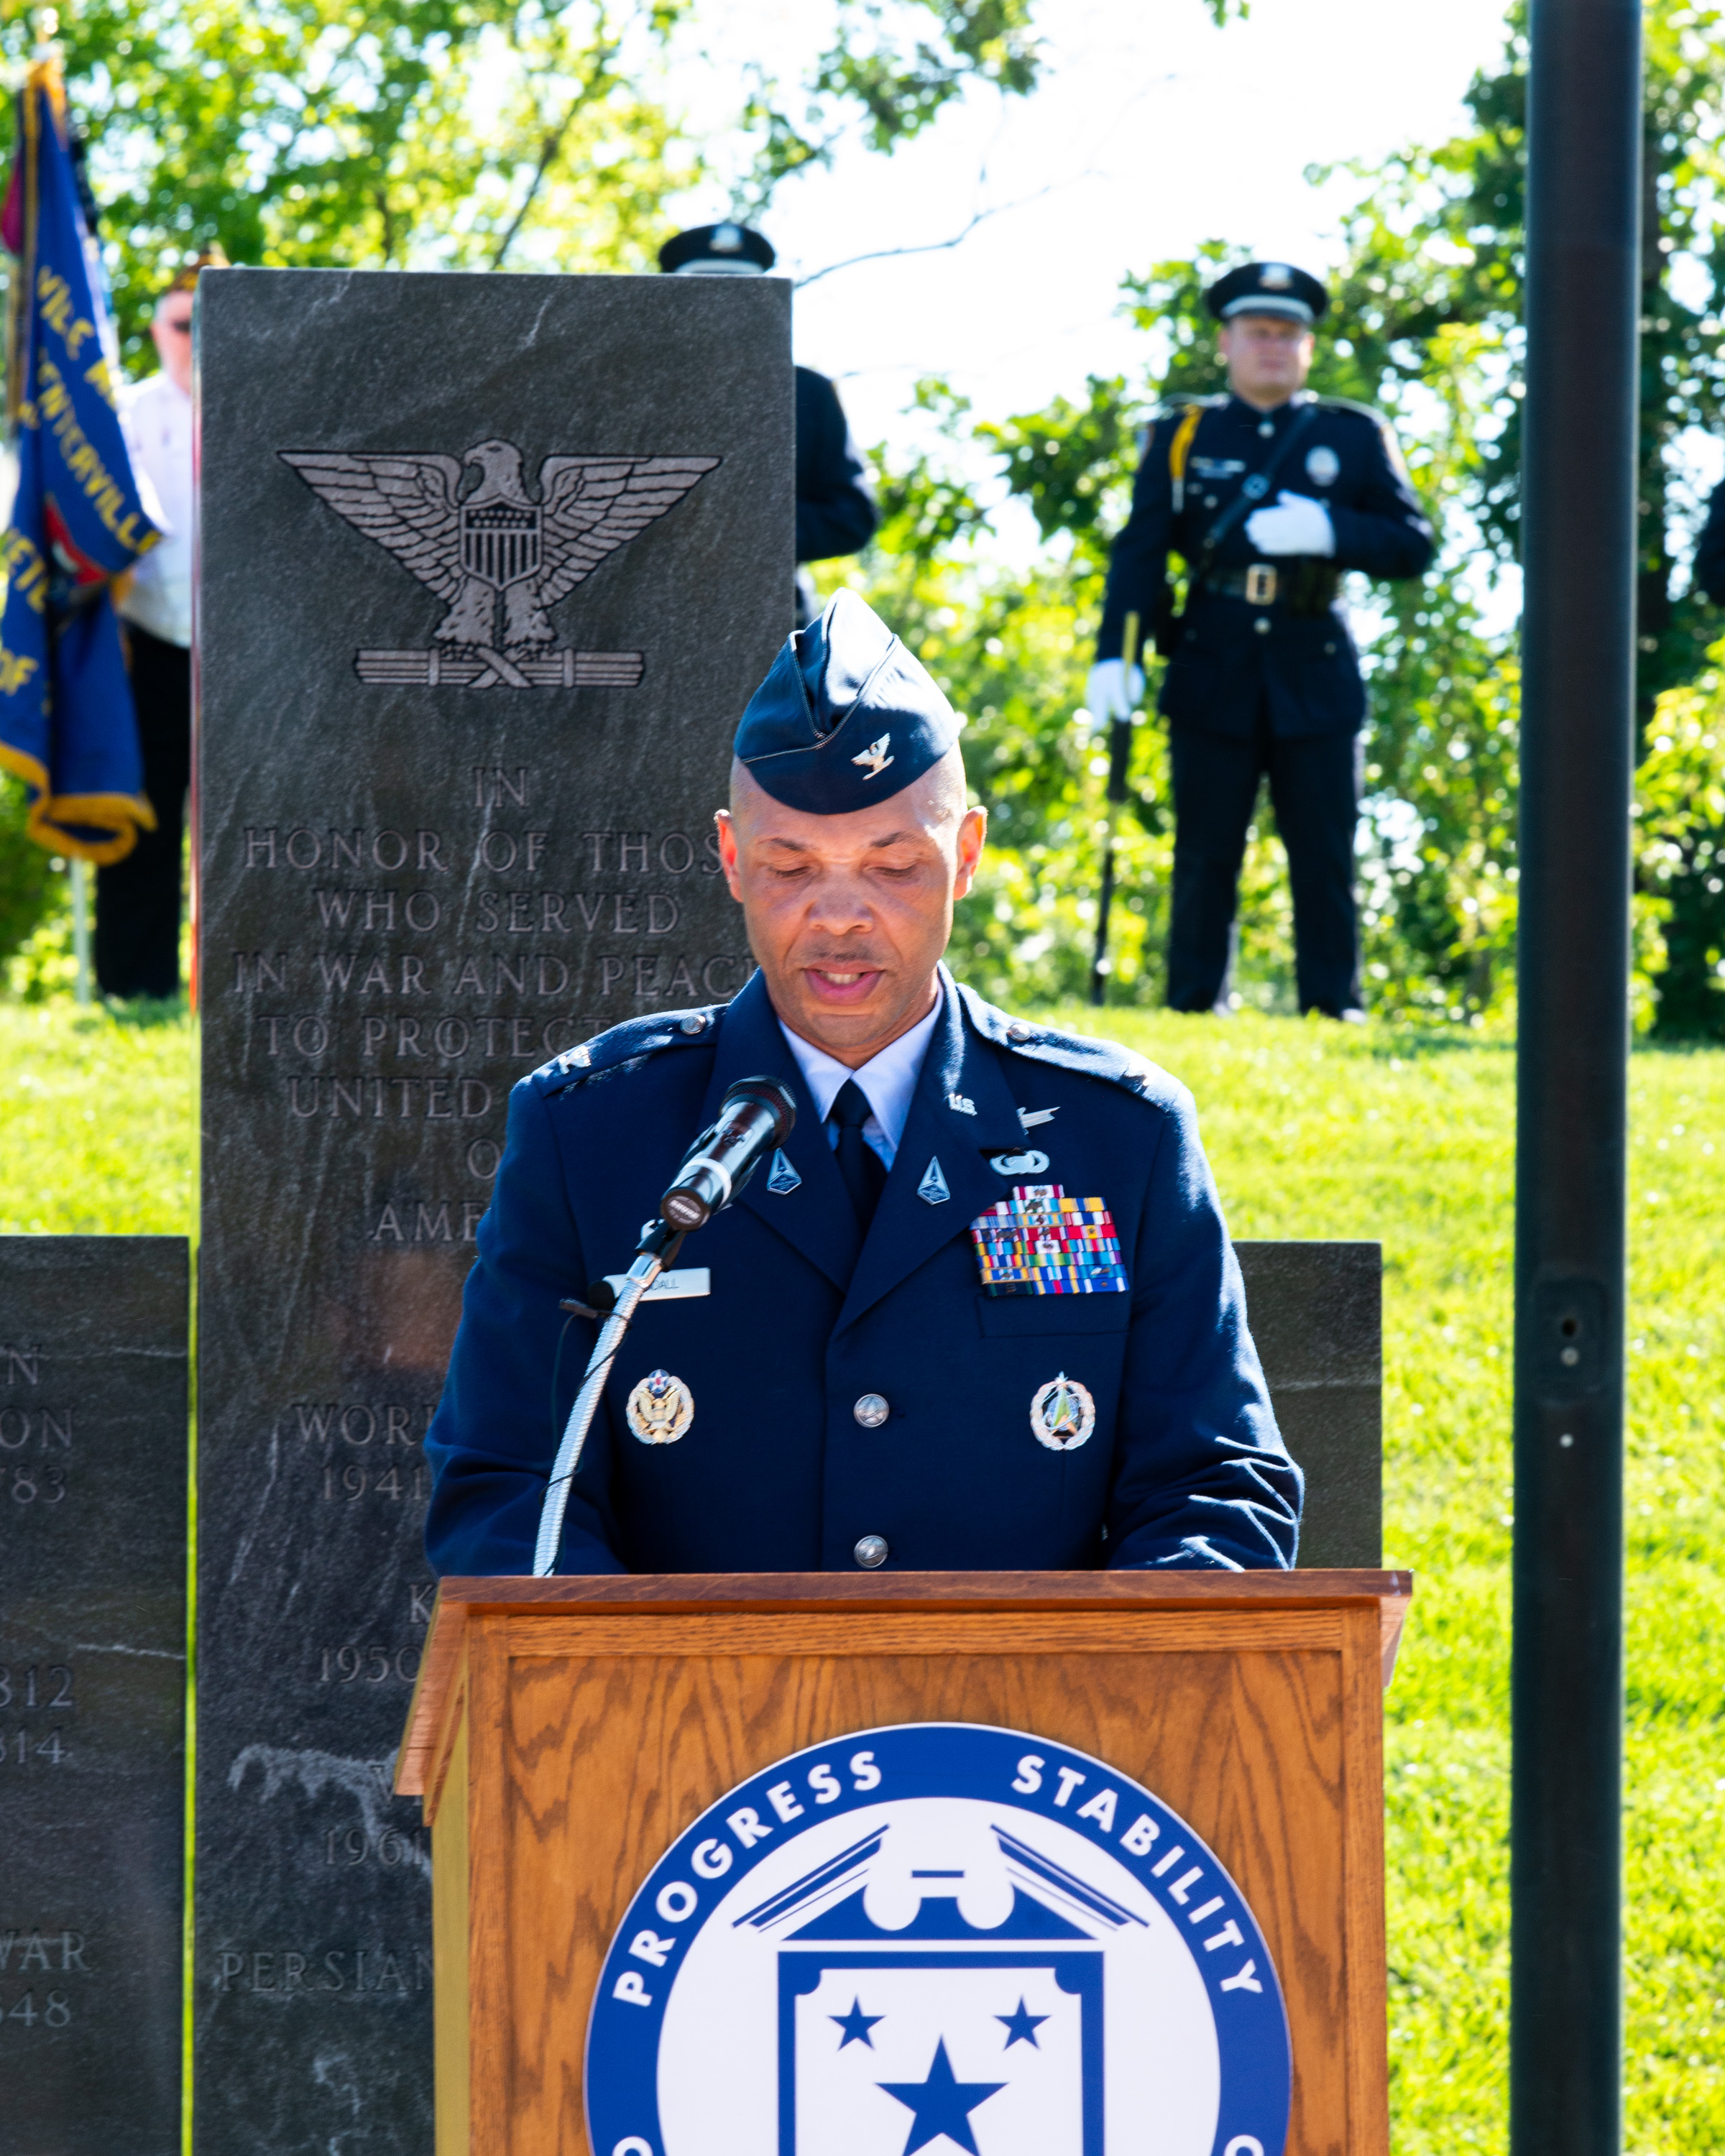 NSIC commander speaks at Memorial Day ceremony